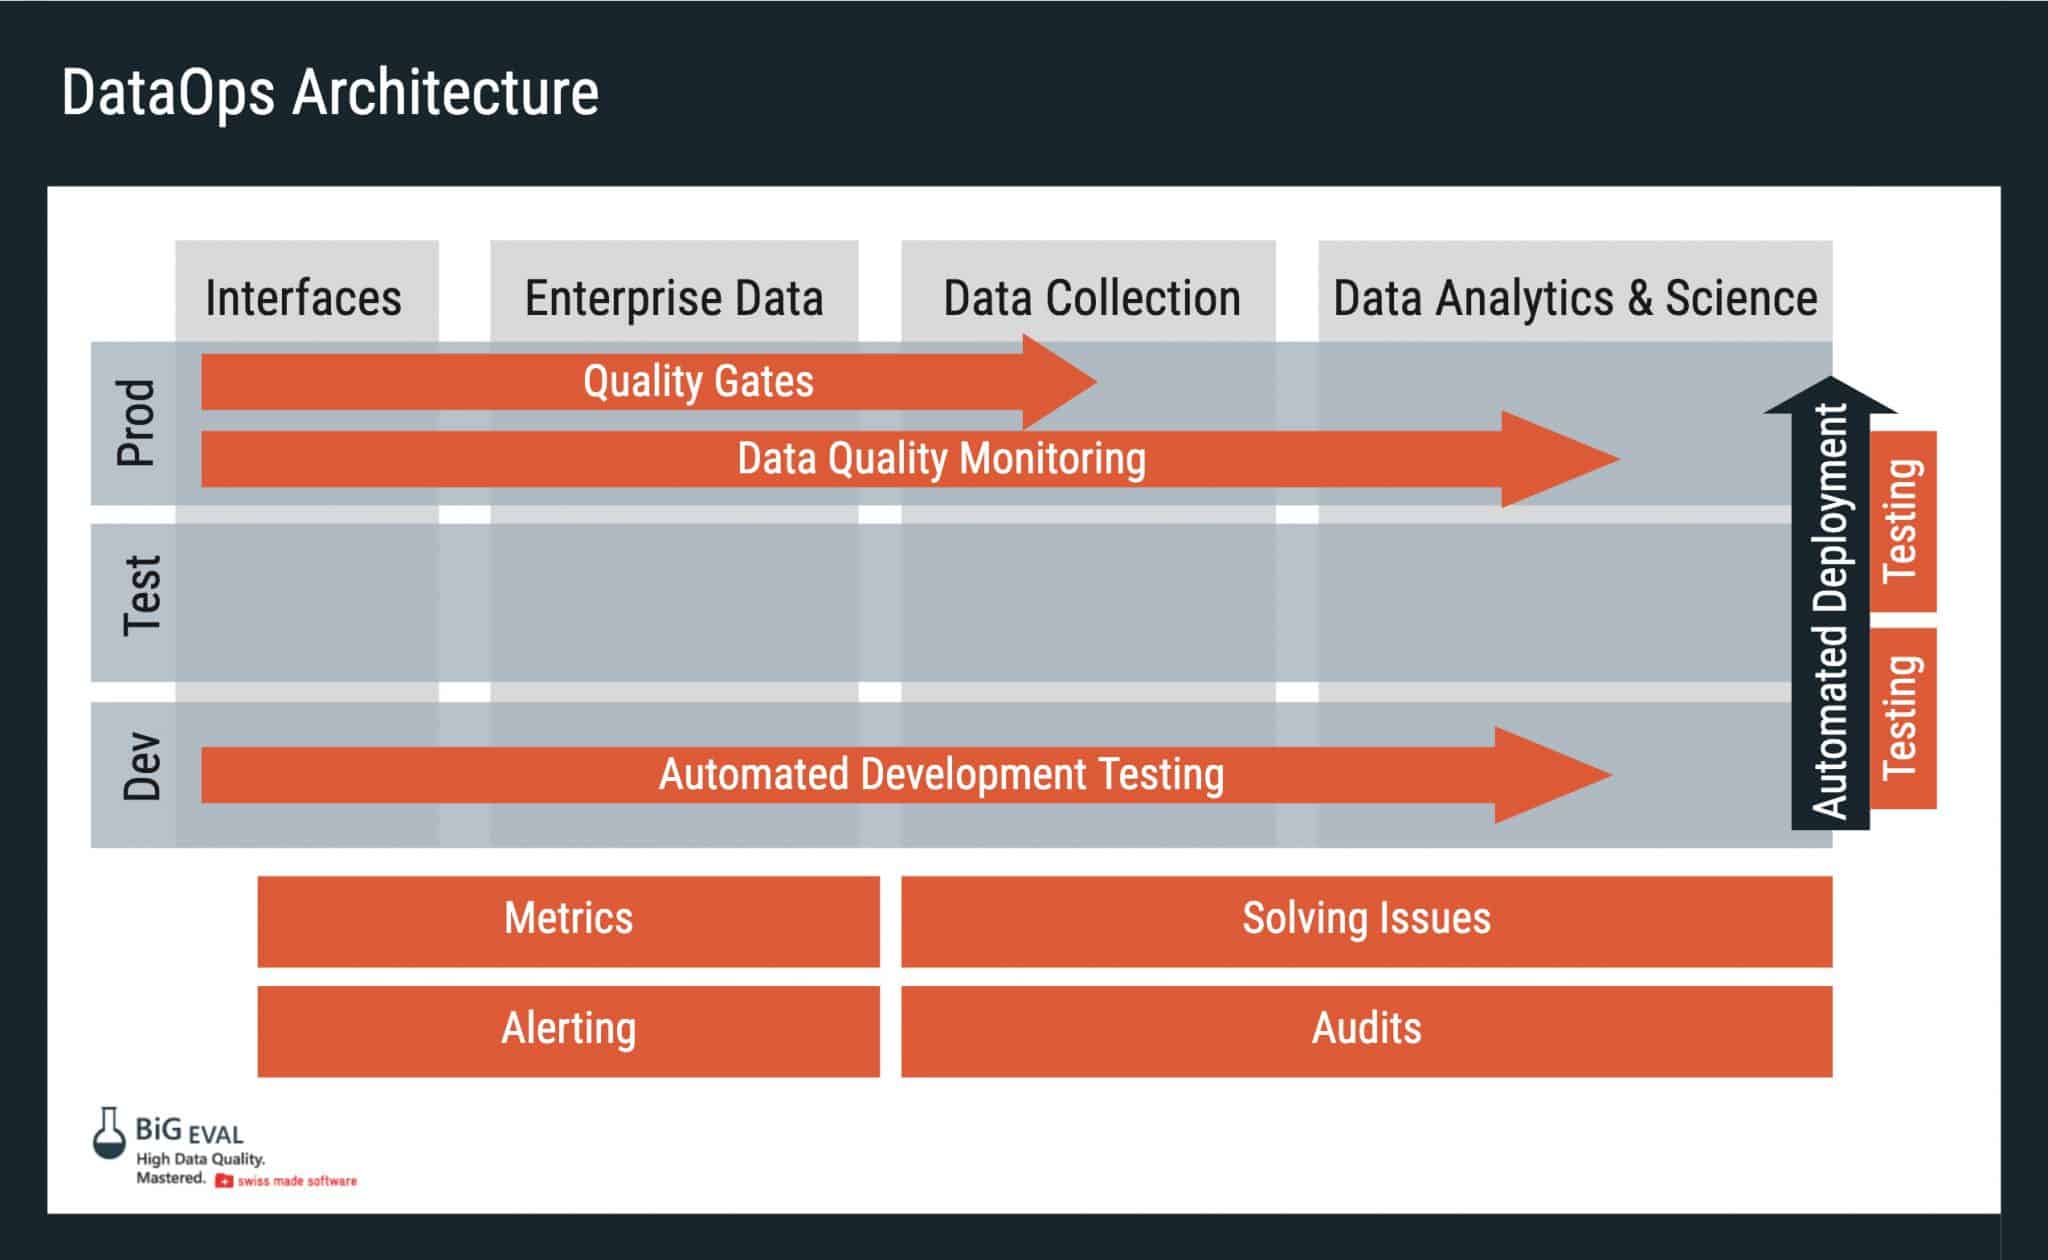 DataOps Architecture